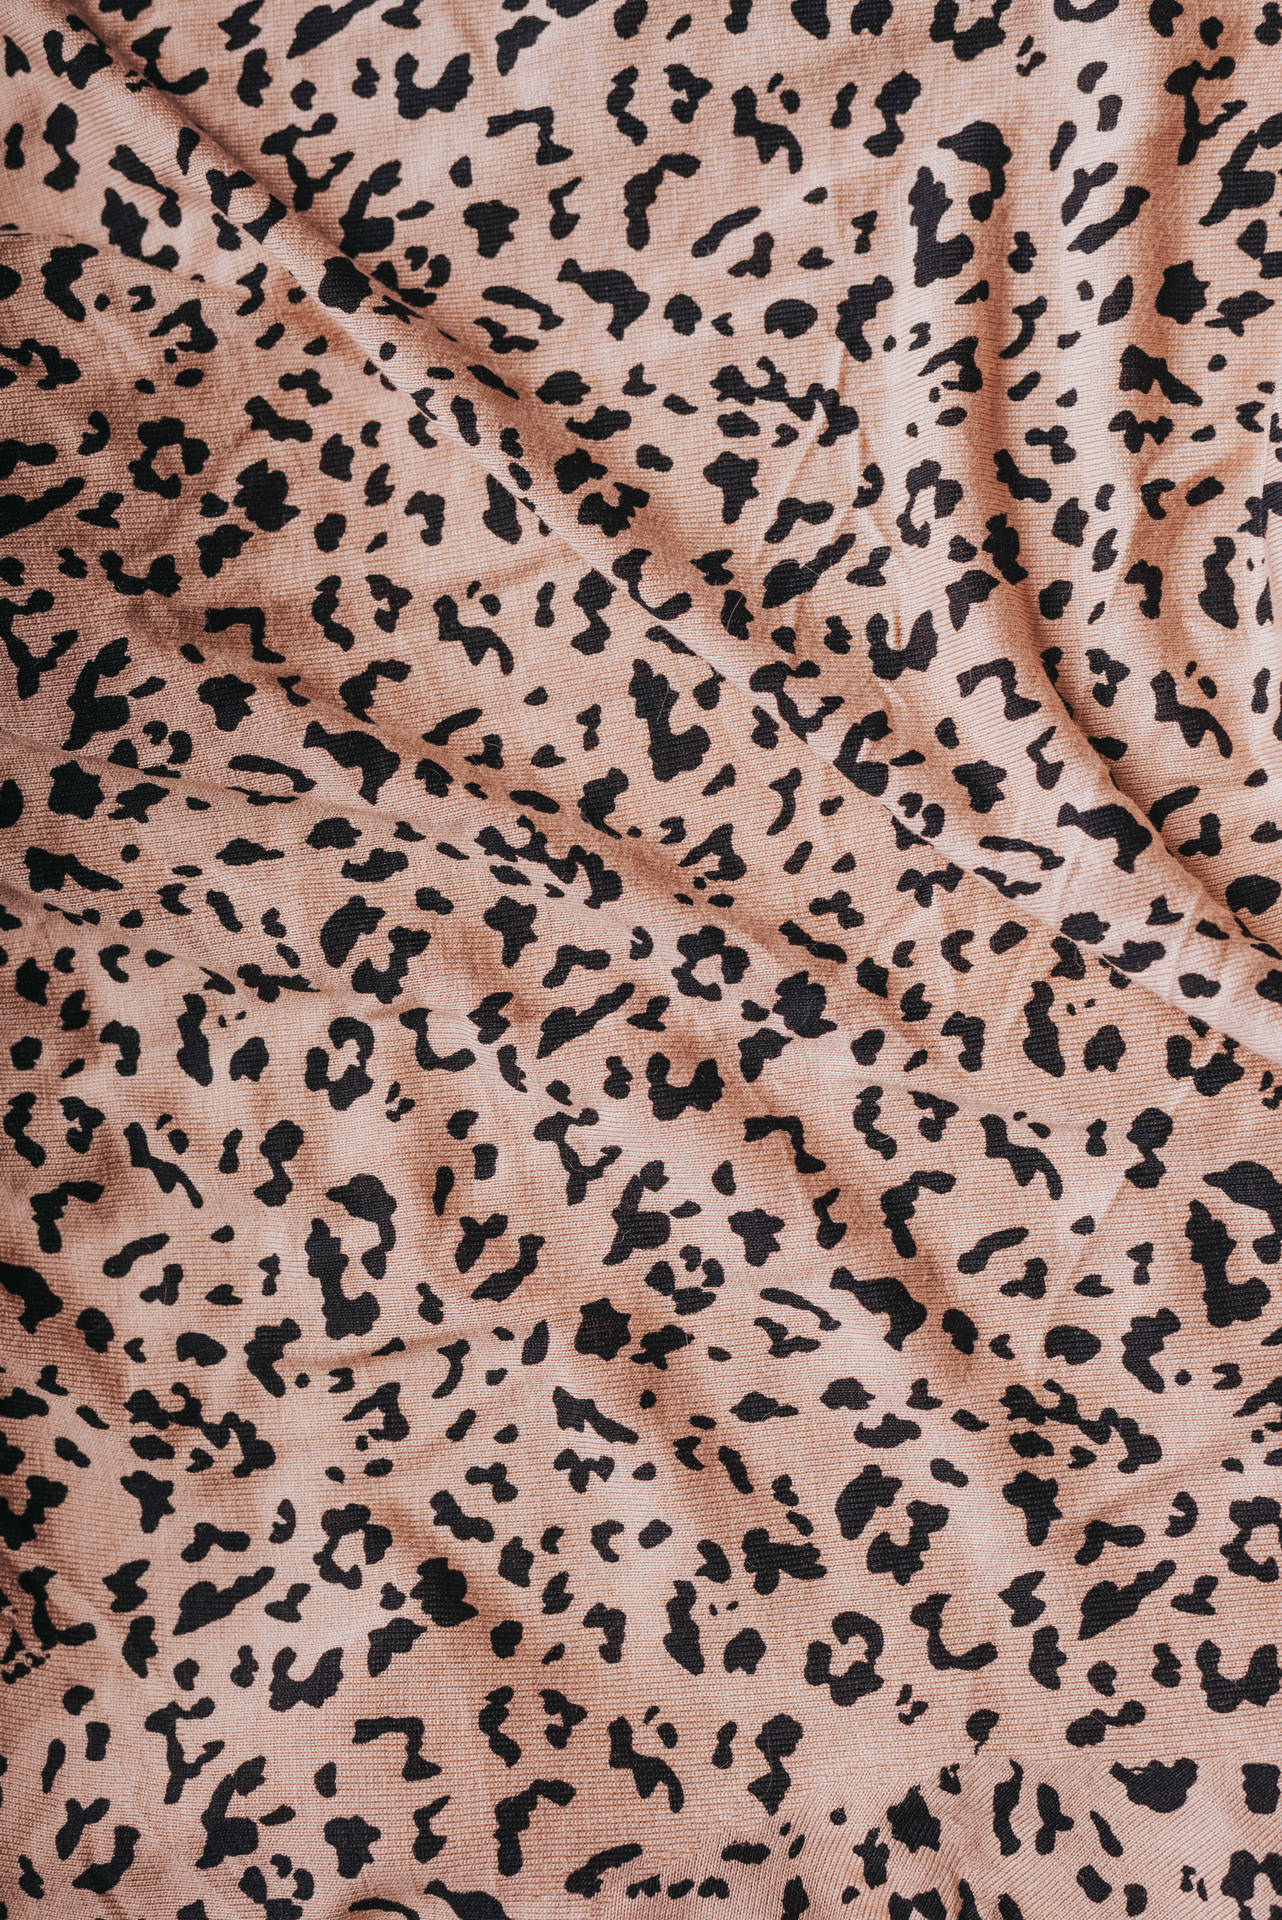 Cheetah Printed Blanket Wallpaper